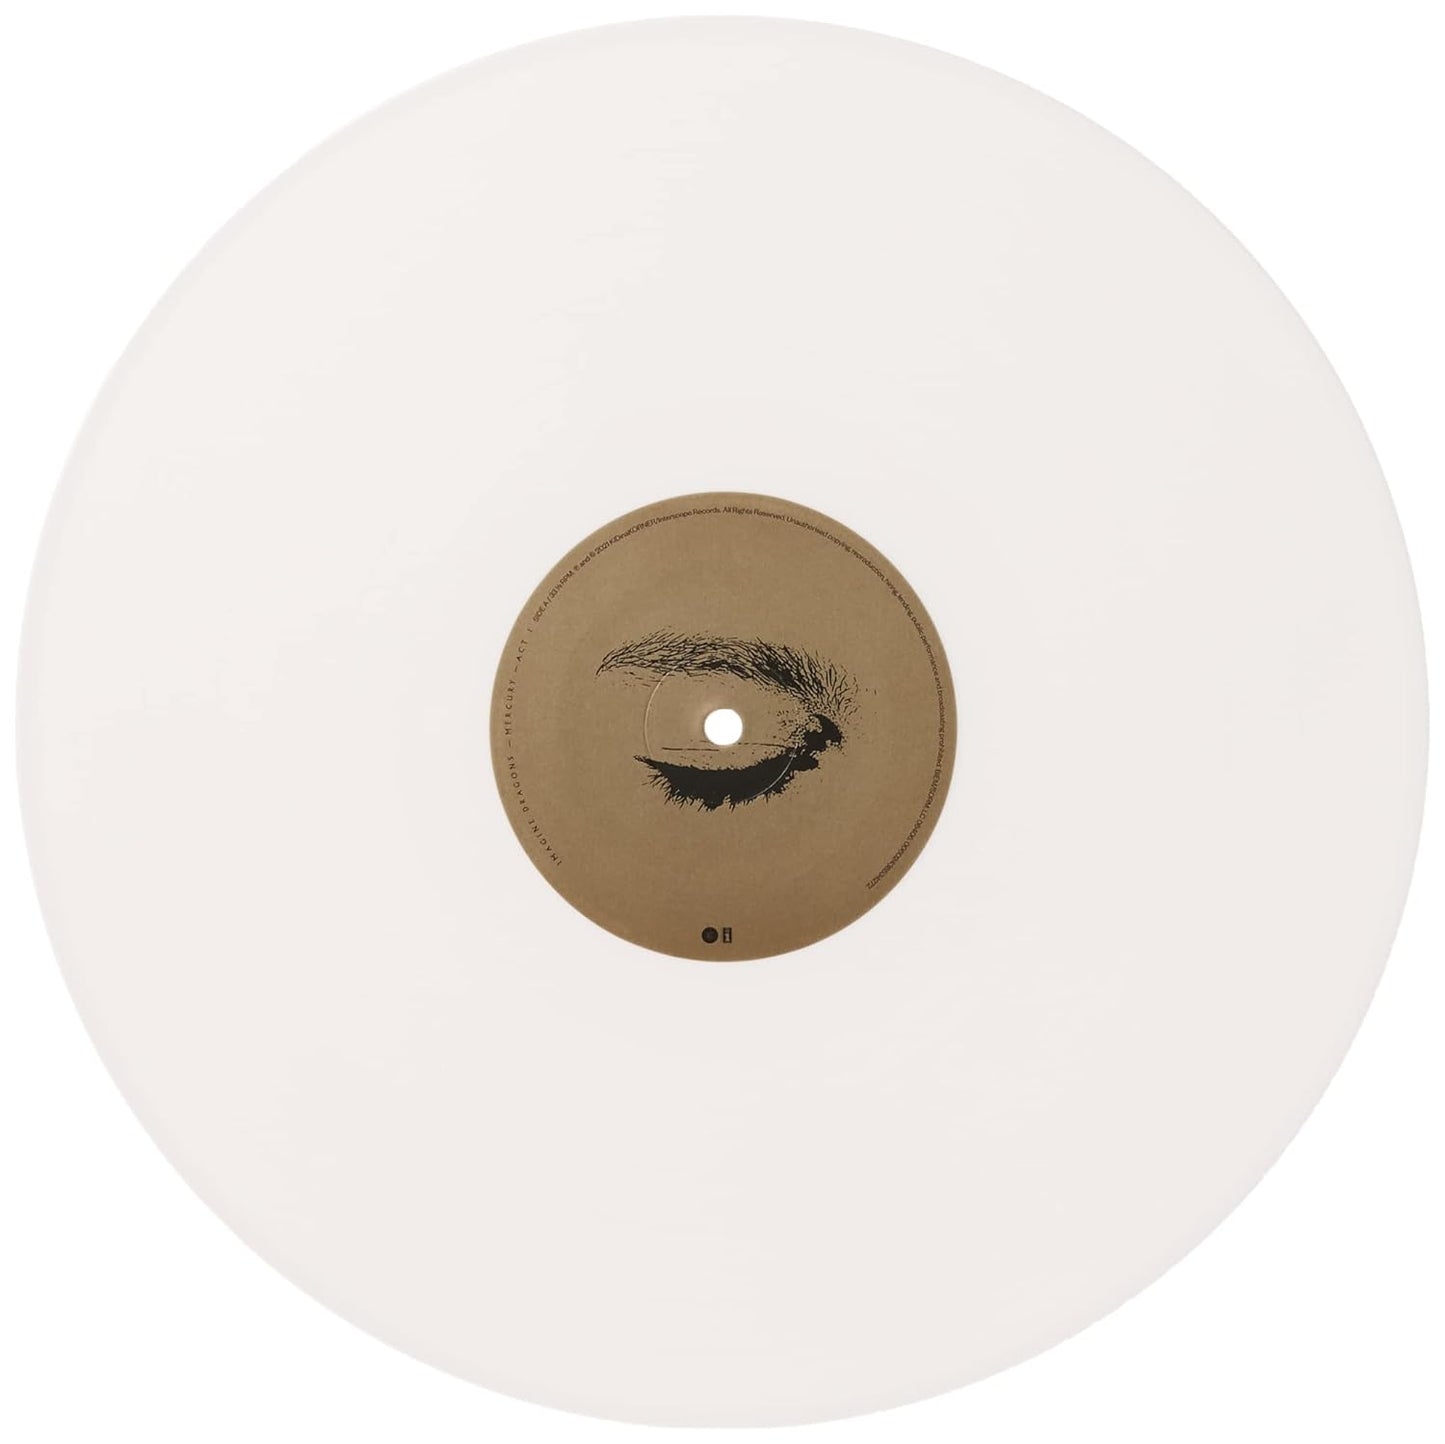 Imagine Dragons - Mercury (Limited Edition Import, White Vinyl) (LP) - Joco Records